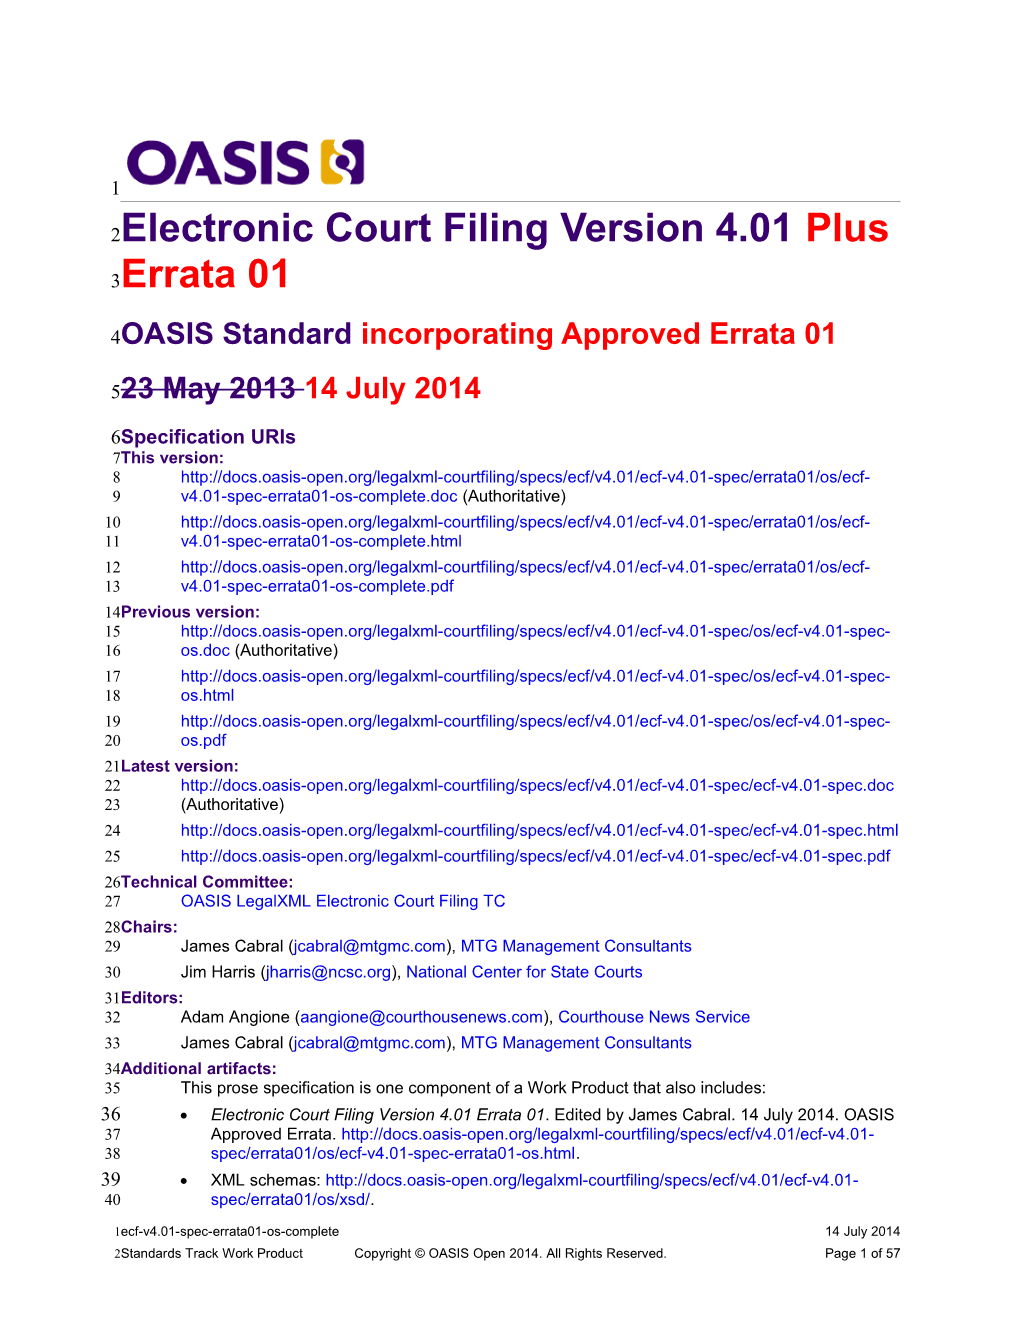 Electronic Court Filing Version 4.01 Plus Errata 01